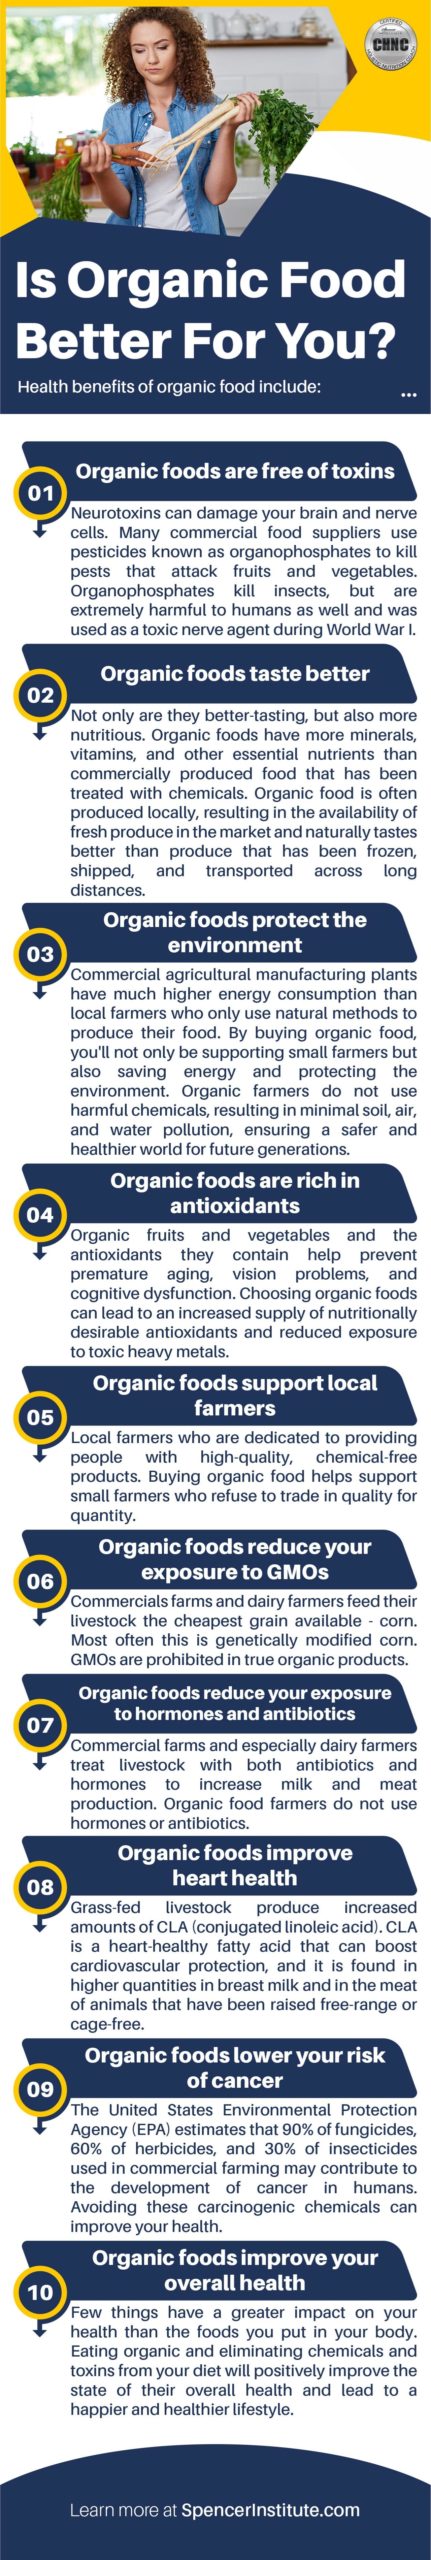 benefits-or-eating-organic-food